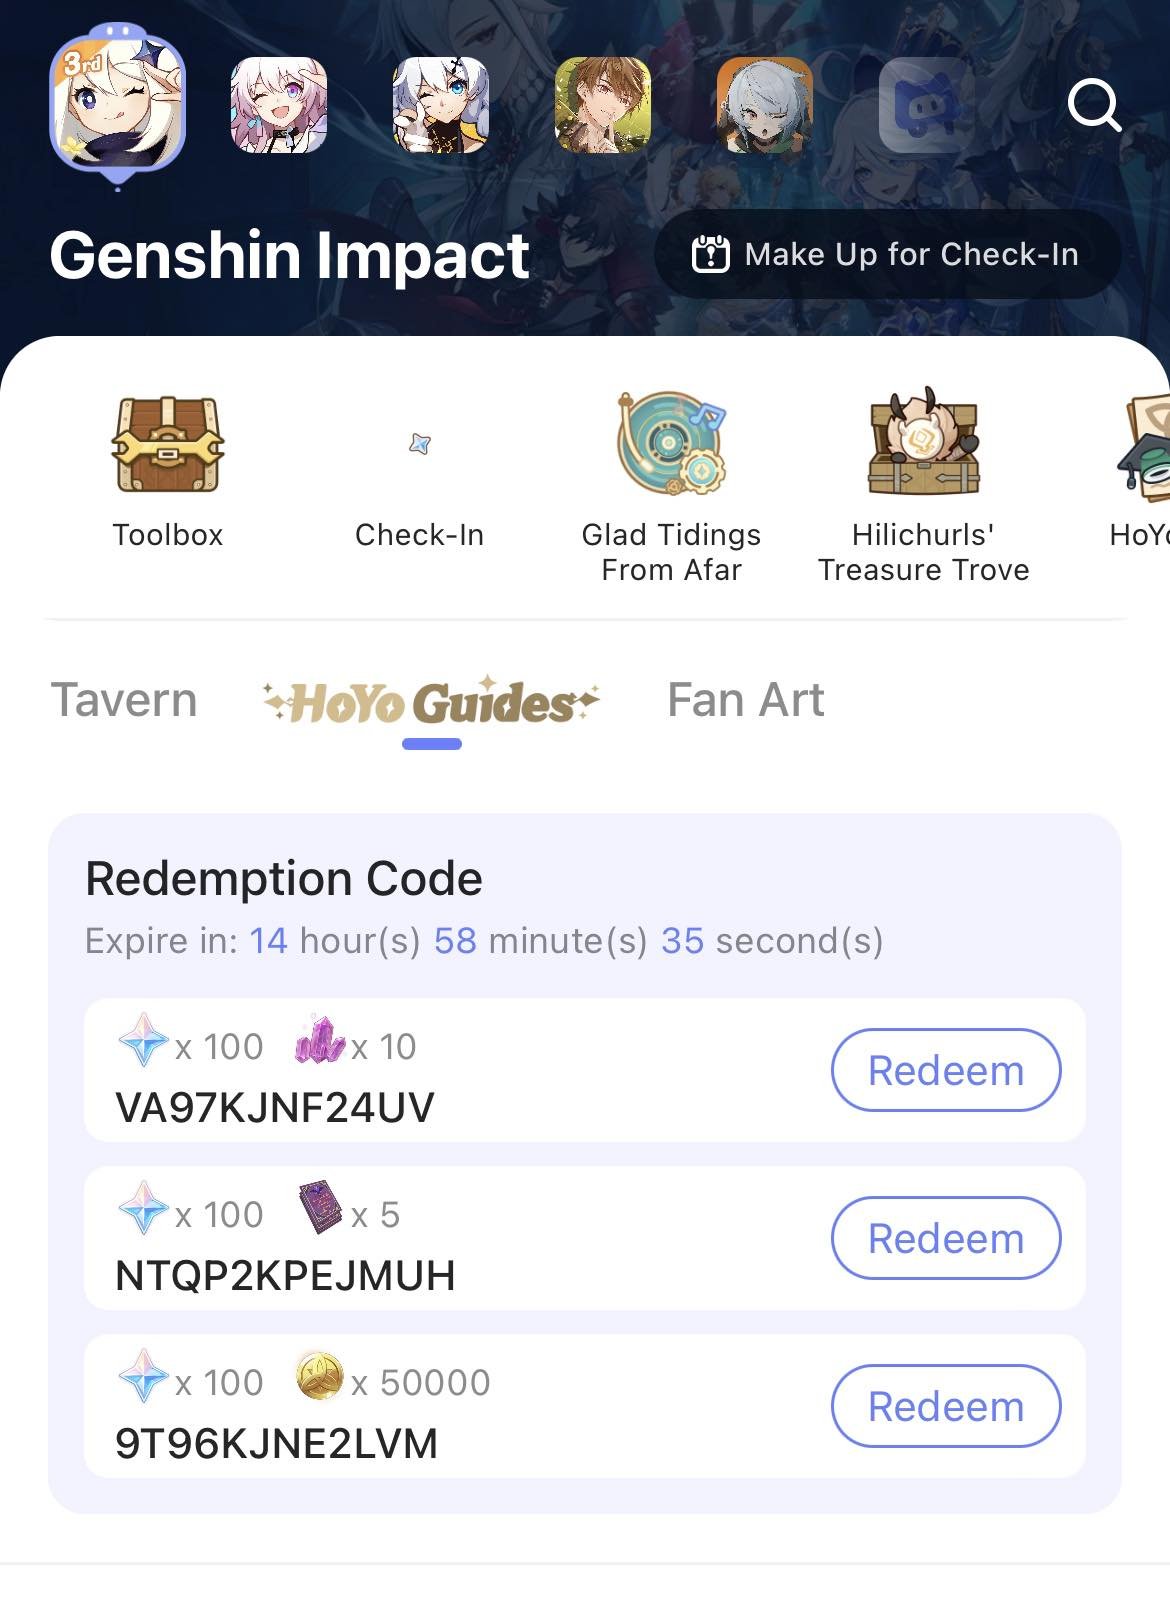 Genshin Update  on X: 4.2 Special Program Redemption Code 1. You can go  to your HoYoLab to redeem 2. You can go to  to redeem  ⭐️VA97KJNF24UV ⭐️NTQP2KPEJMUH ⭐️9T96KJNE2LVM #GenshinImpact #原神 #